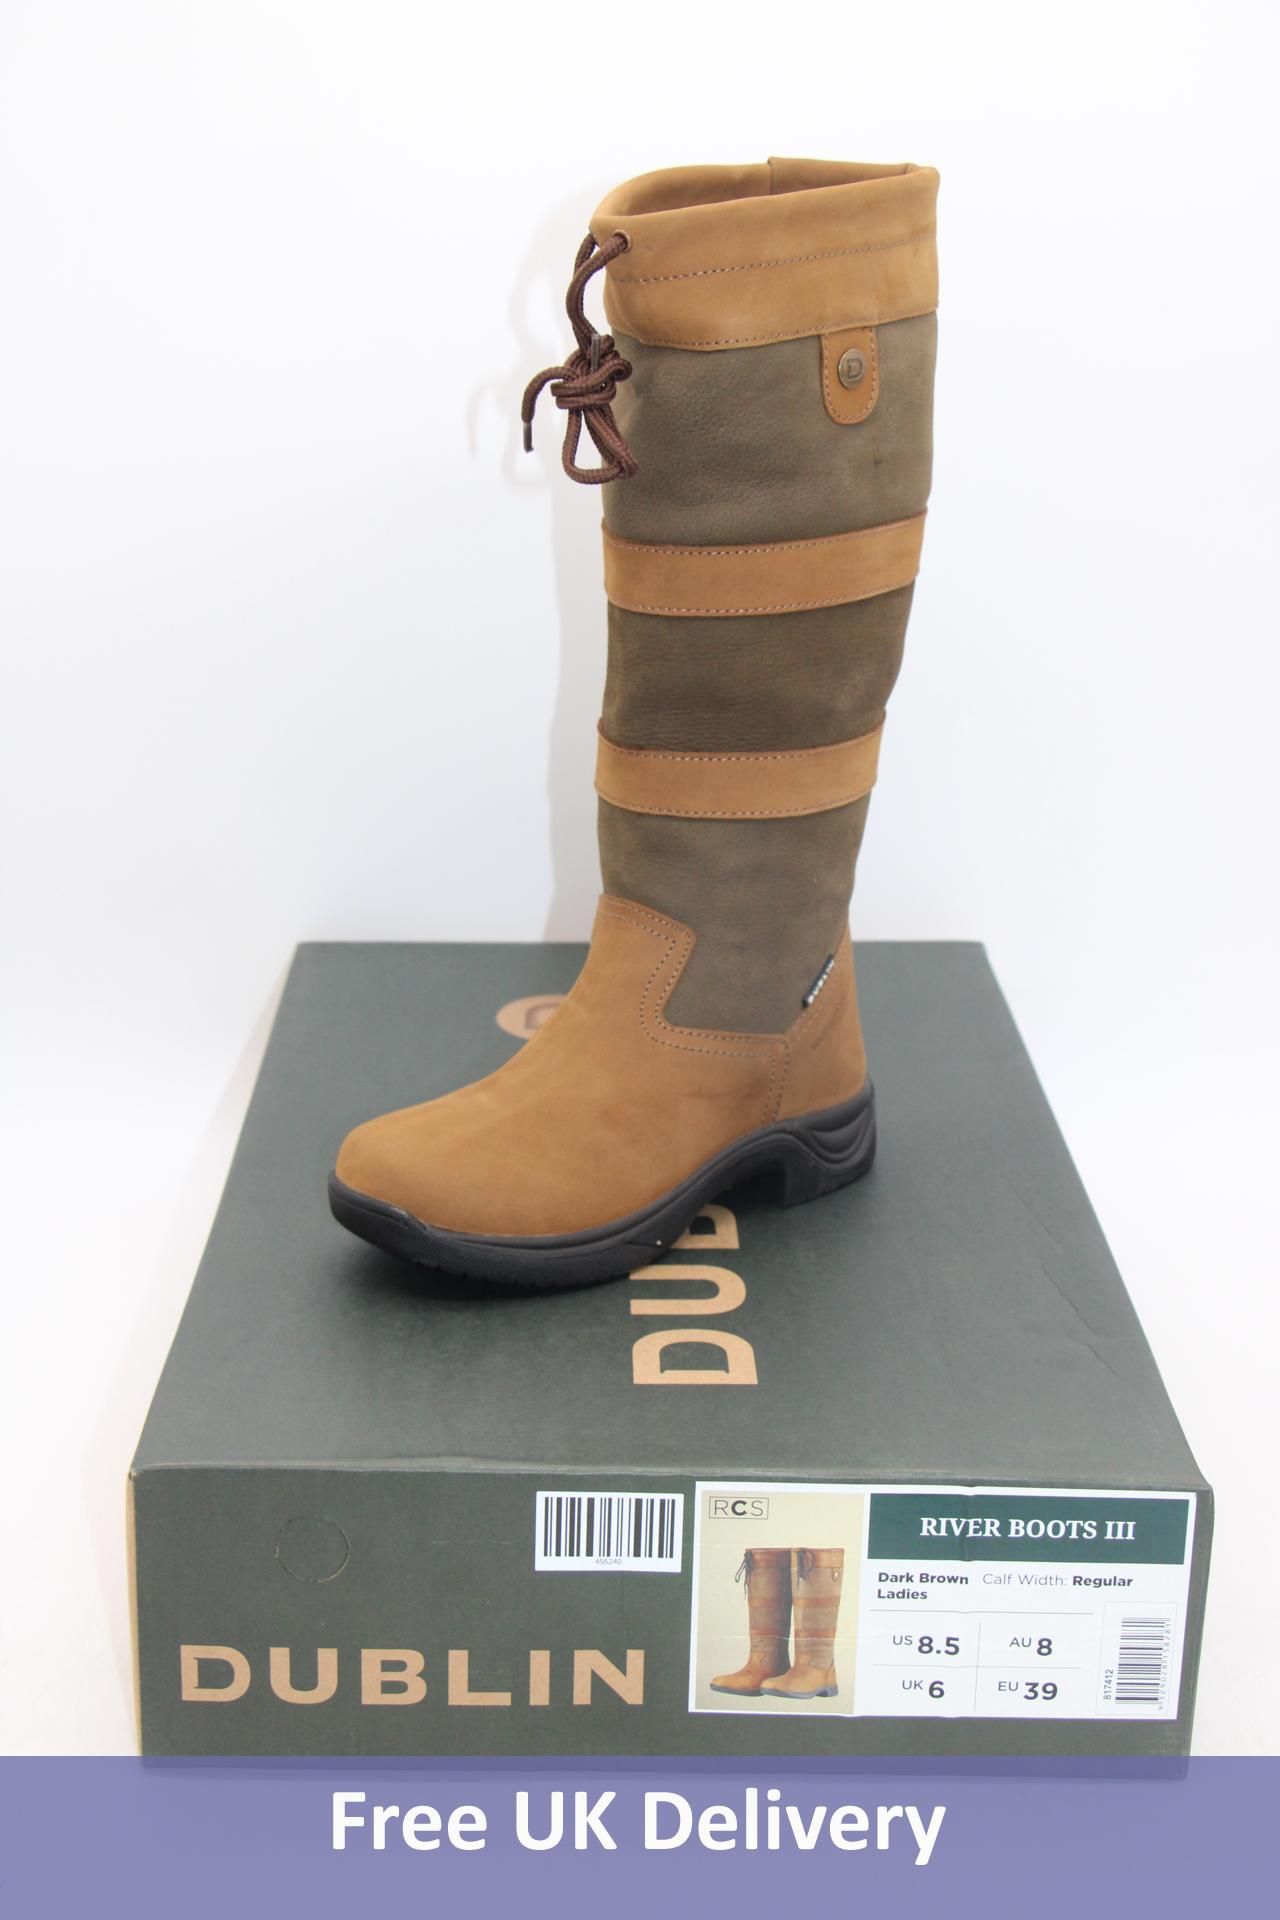 Dublin River Boots, Dark Brown, UK 6